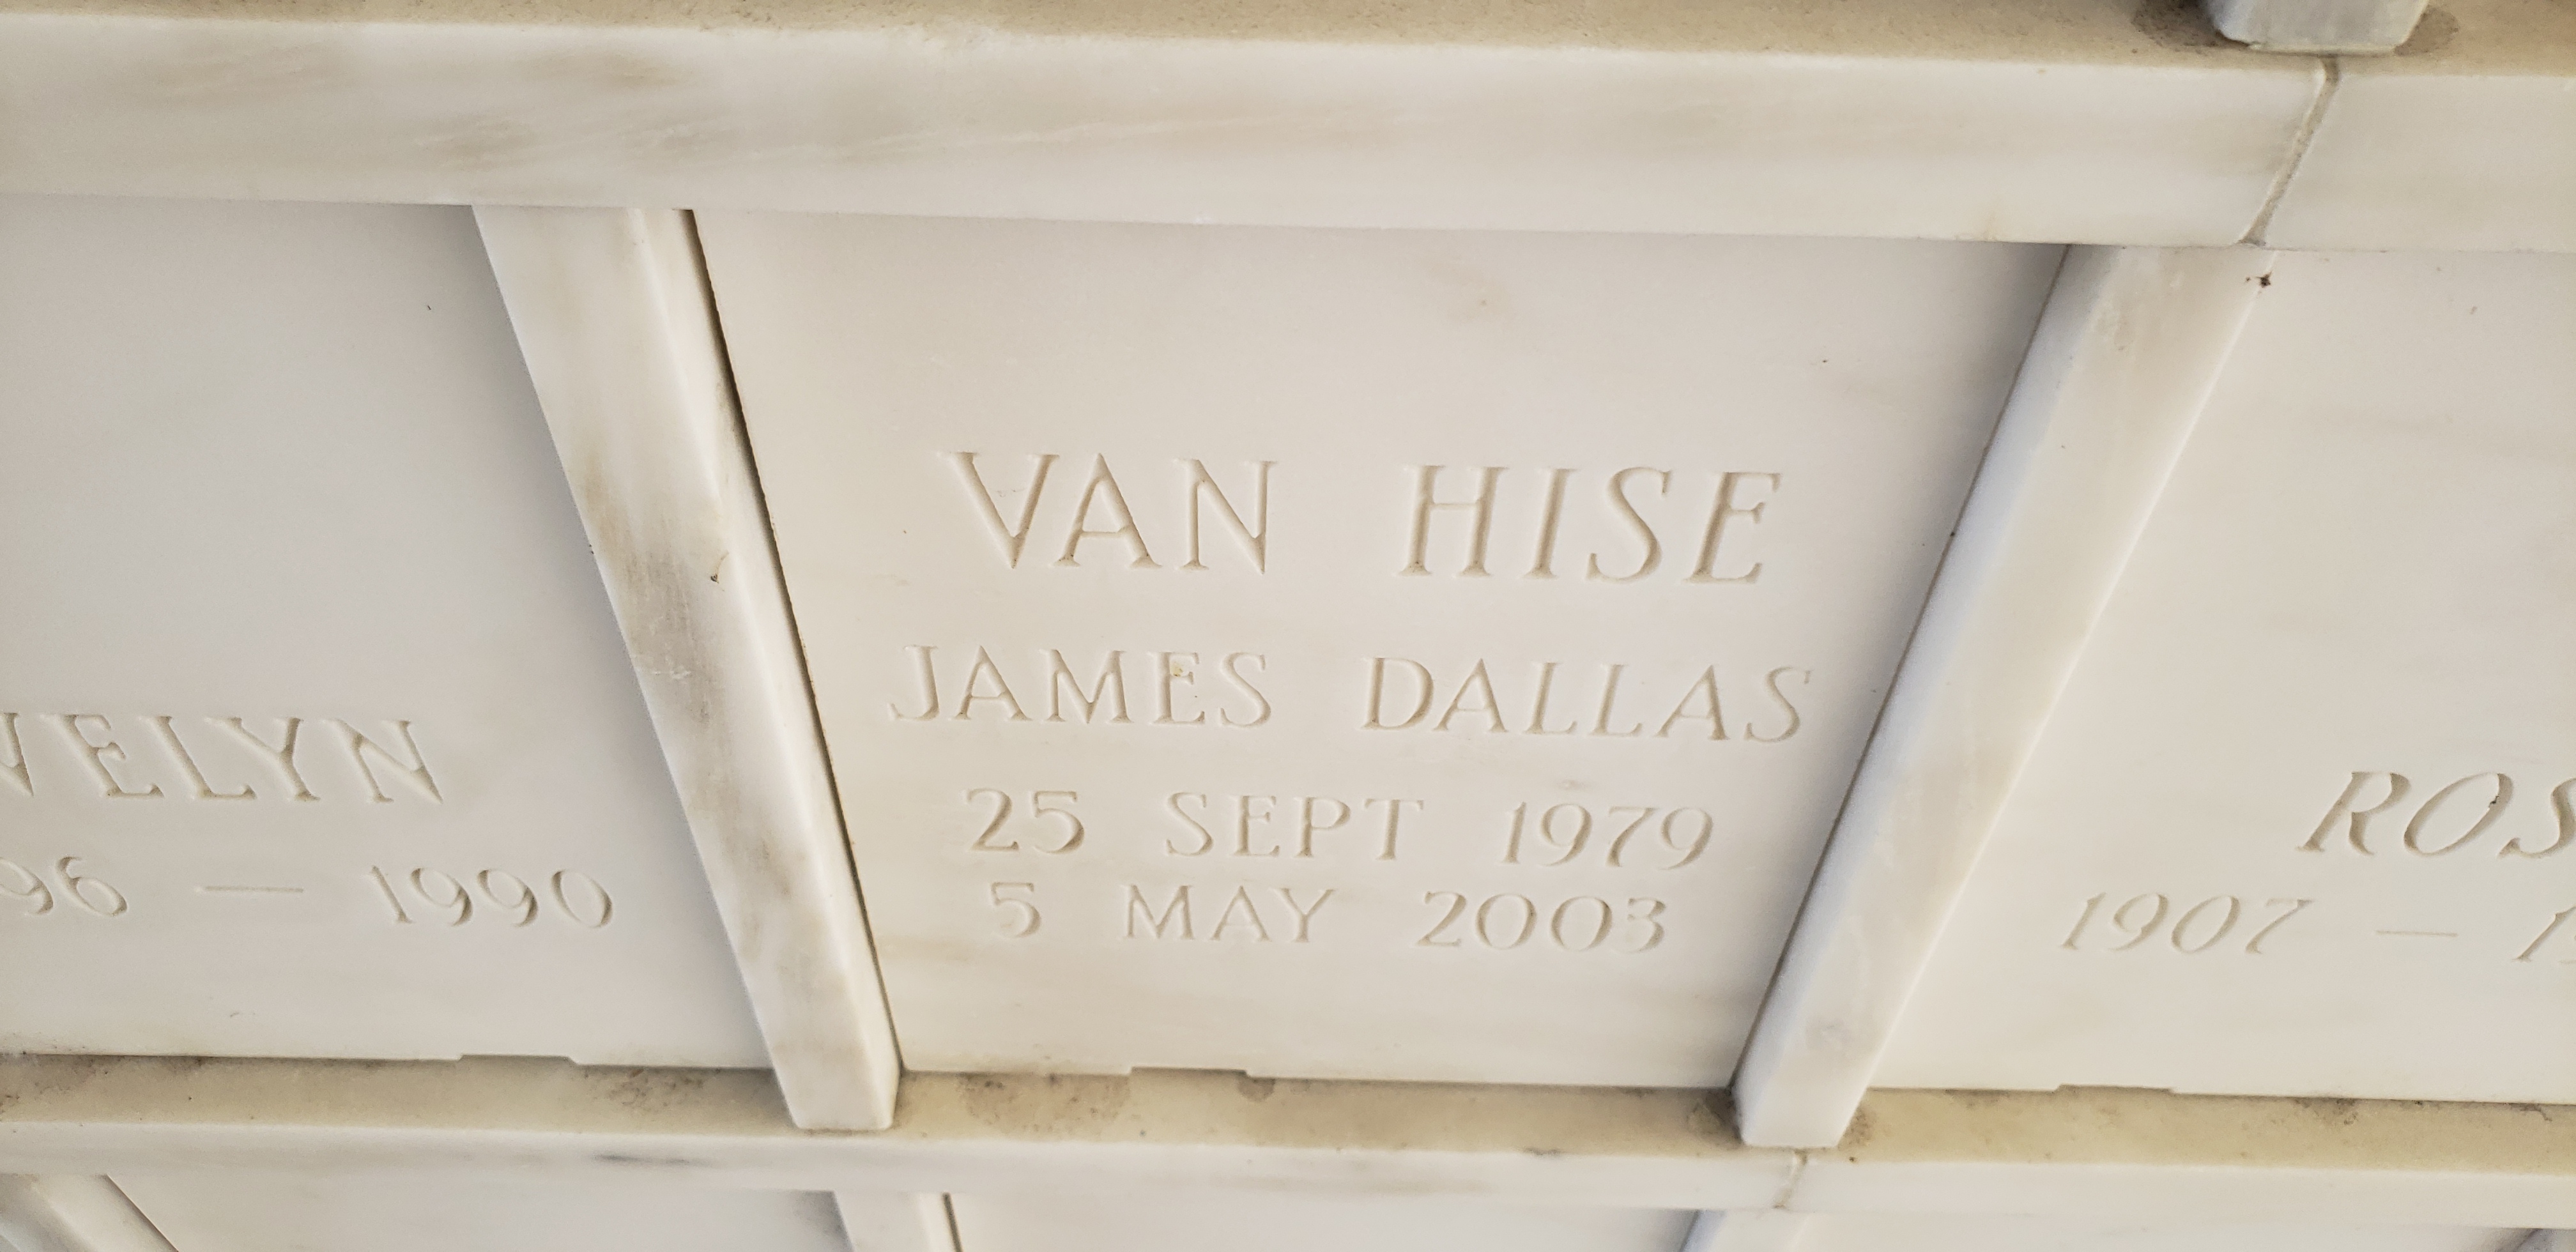 James Dallas Van Hise